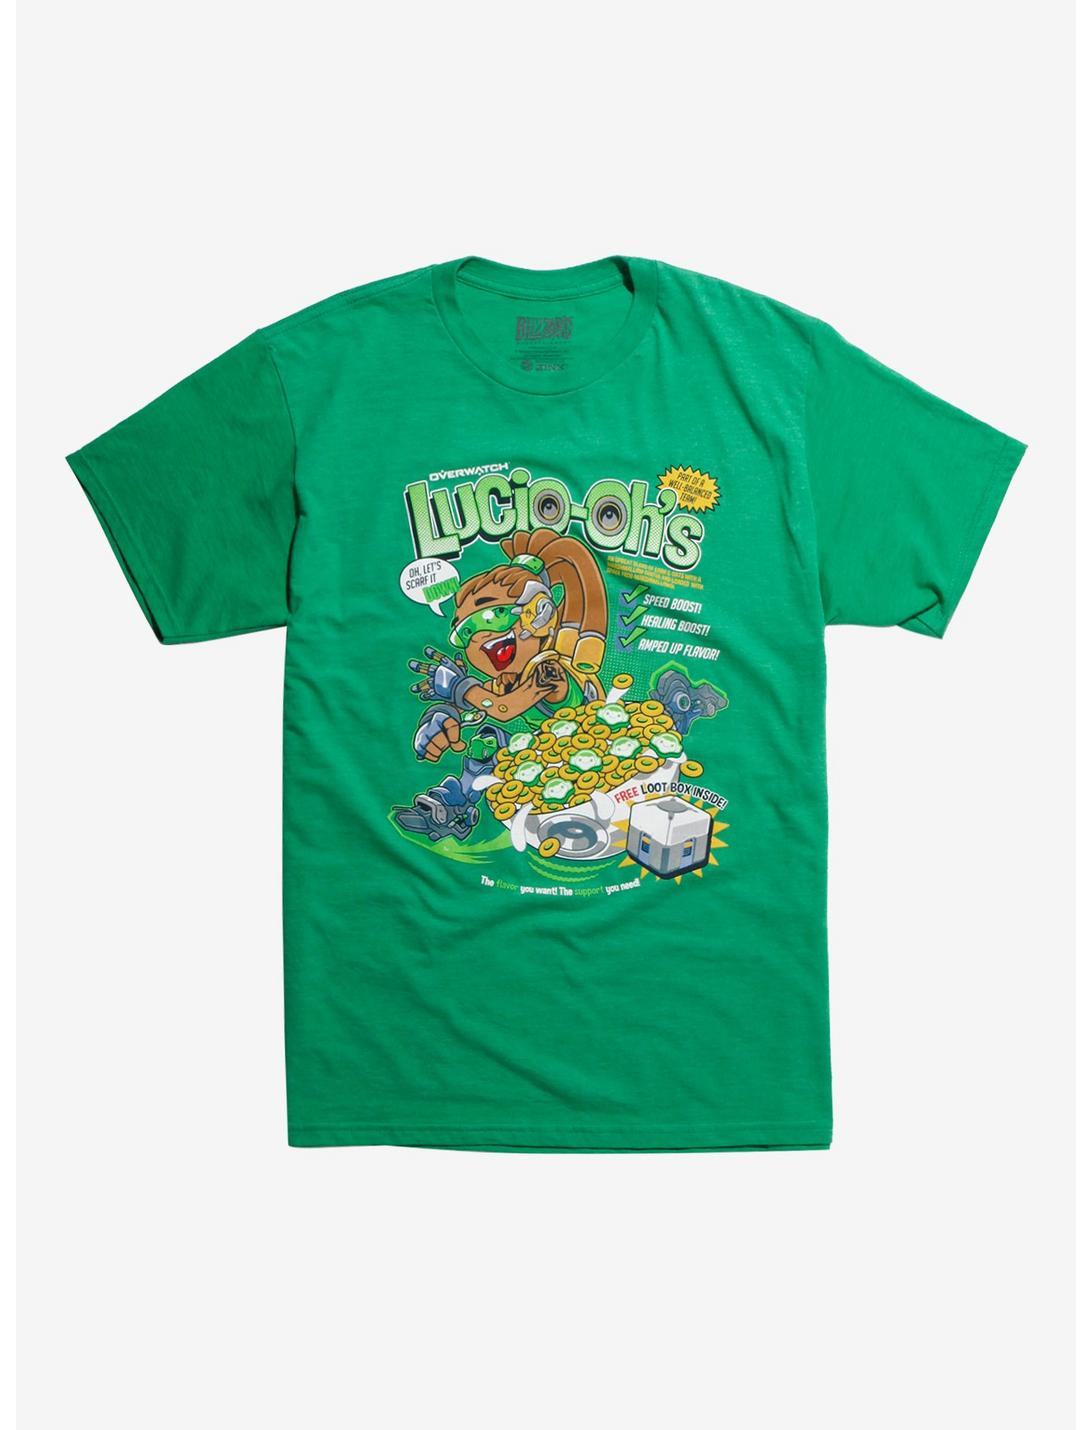 Overwatch Lucio-Oh's Lucio T-Shirt, GREEN, hi-res